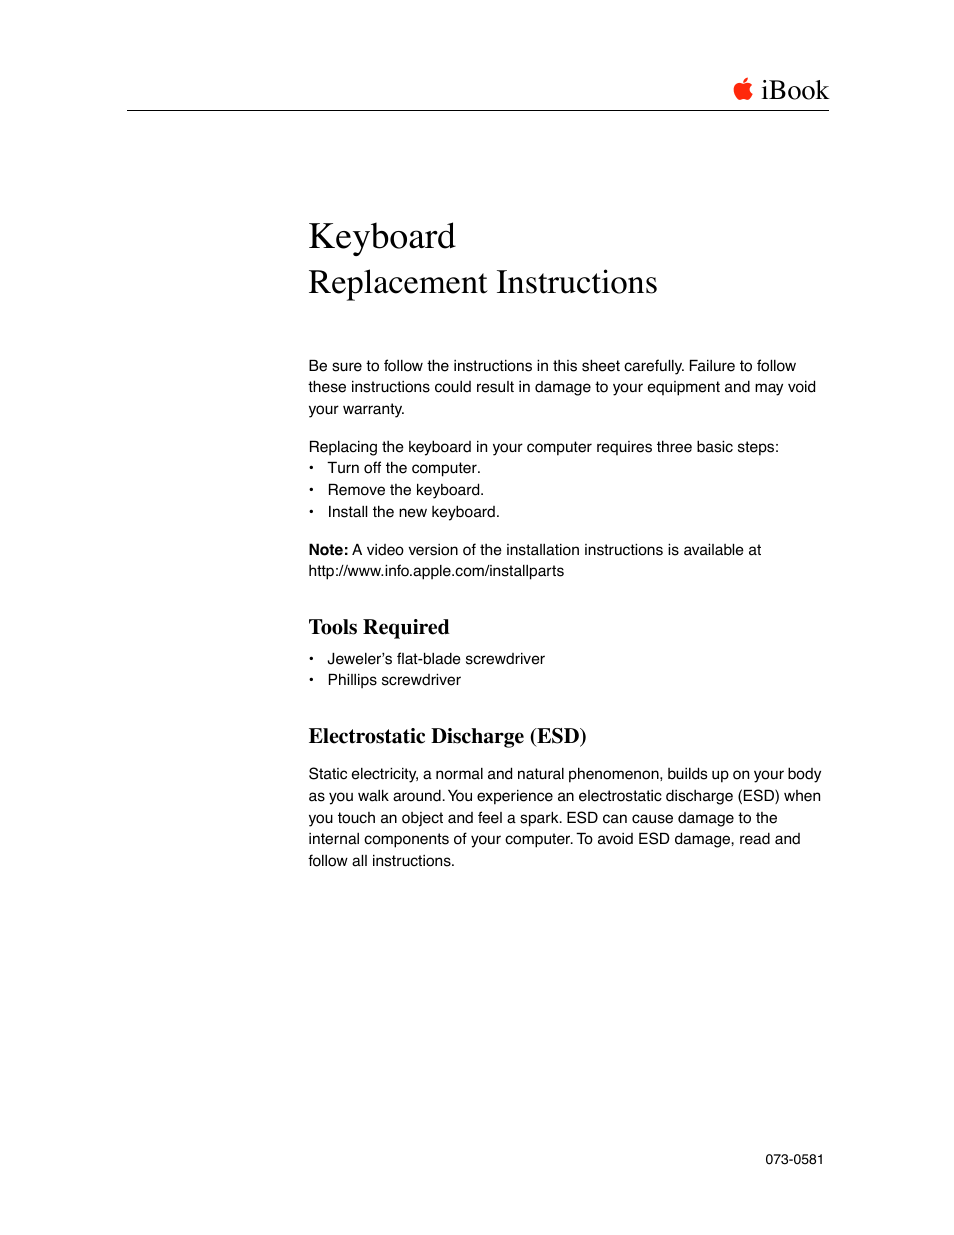 iBook (Keyboard Replacement)